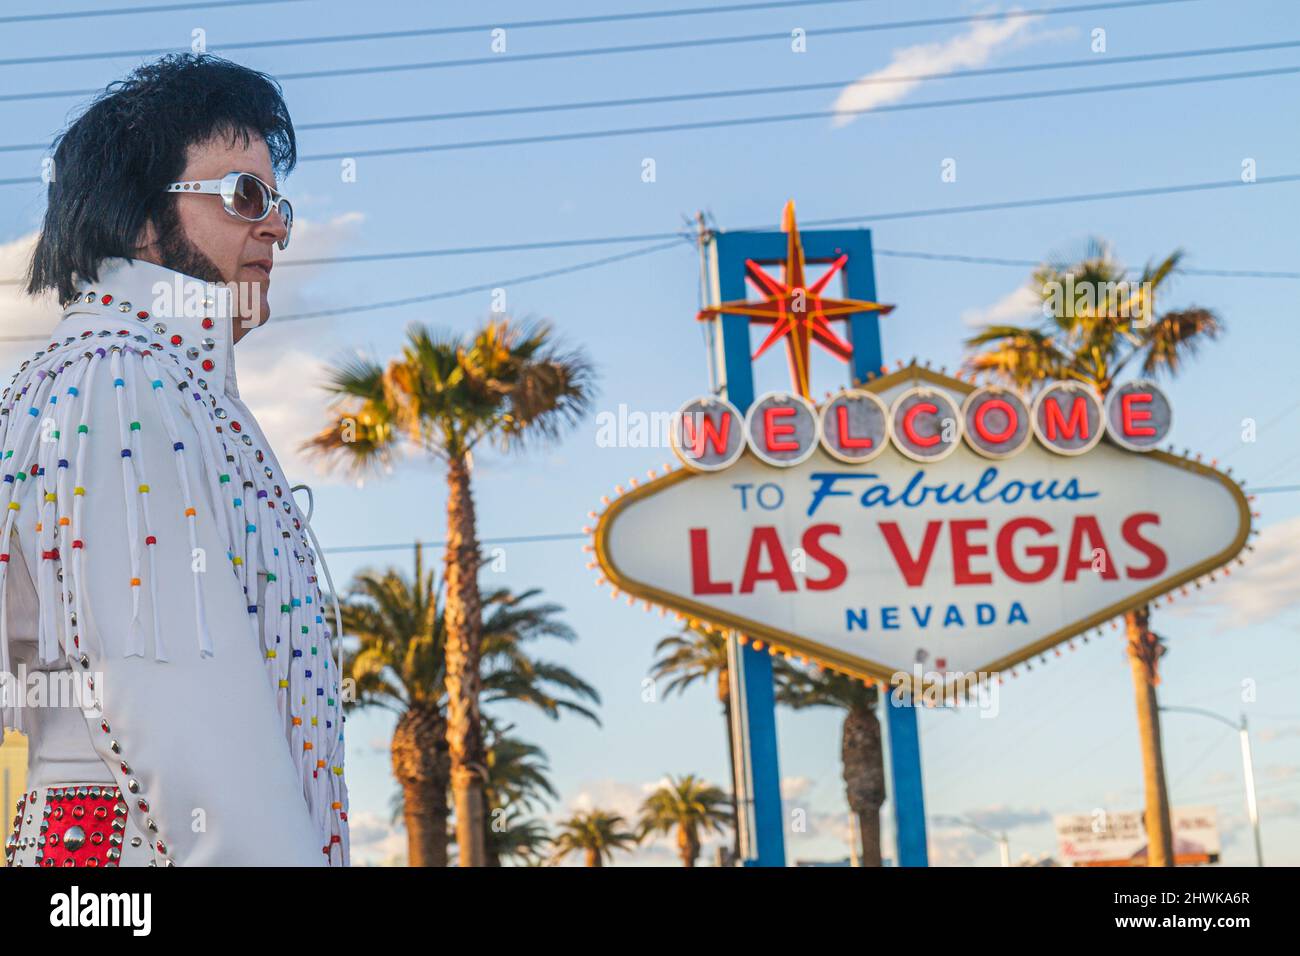 Las Vegas Nevada,South Las Vegas Boulevard Strip,Welcome to Fabulous Las Vegas sign historic,man male Elvis Presley impersonator celebrity look-alike Stock Photo